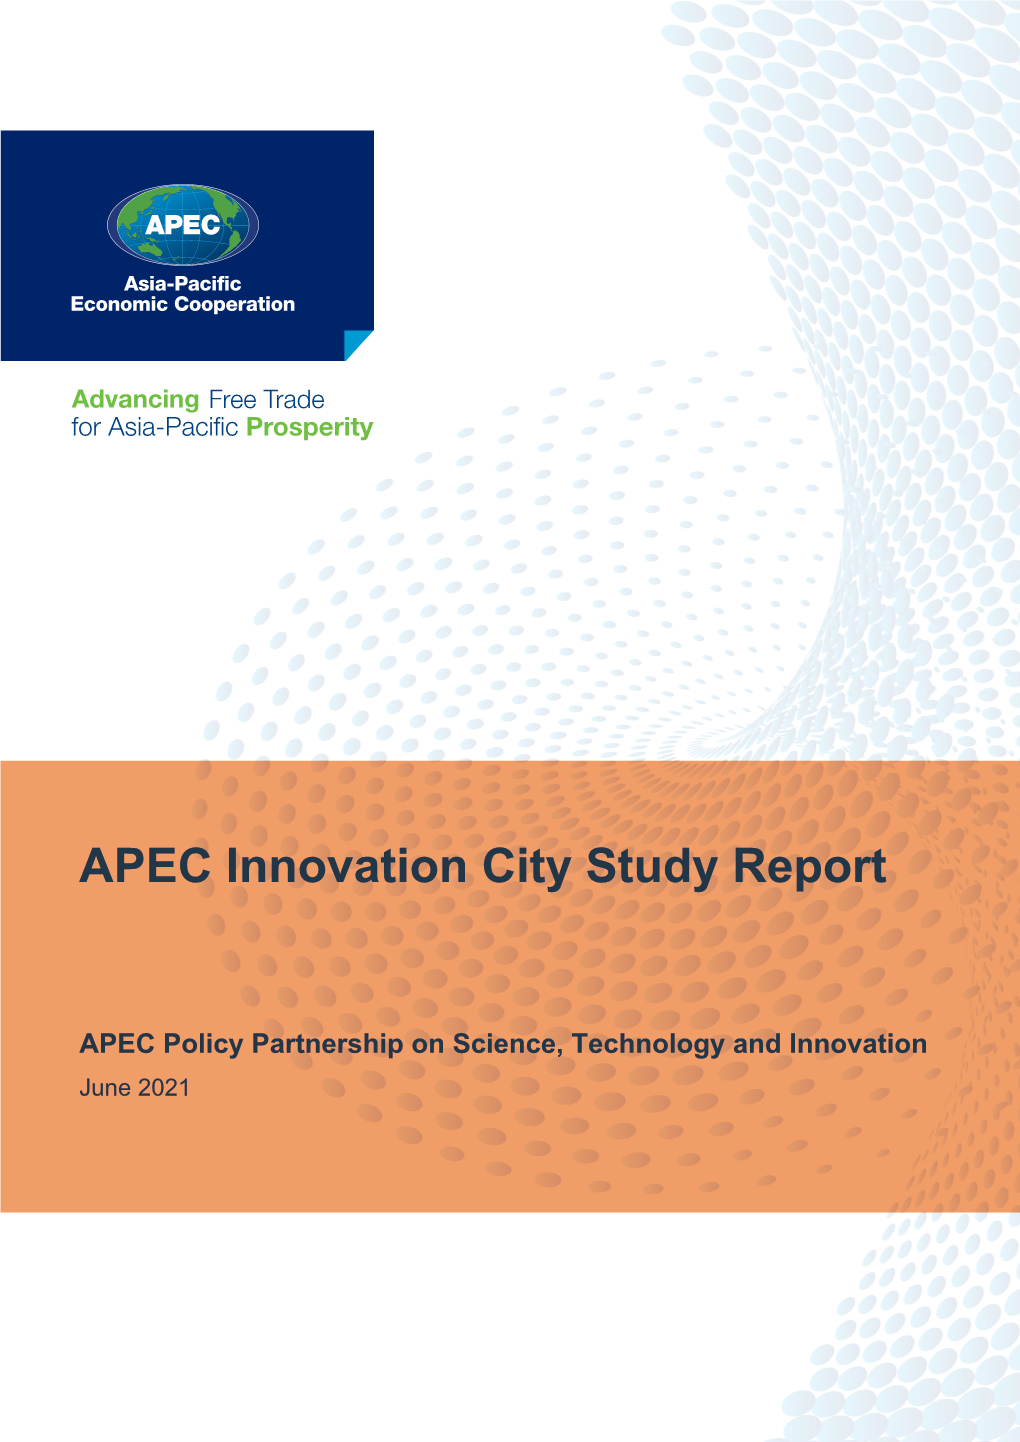 APEC Innovation City Study Report